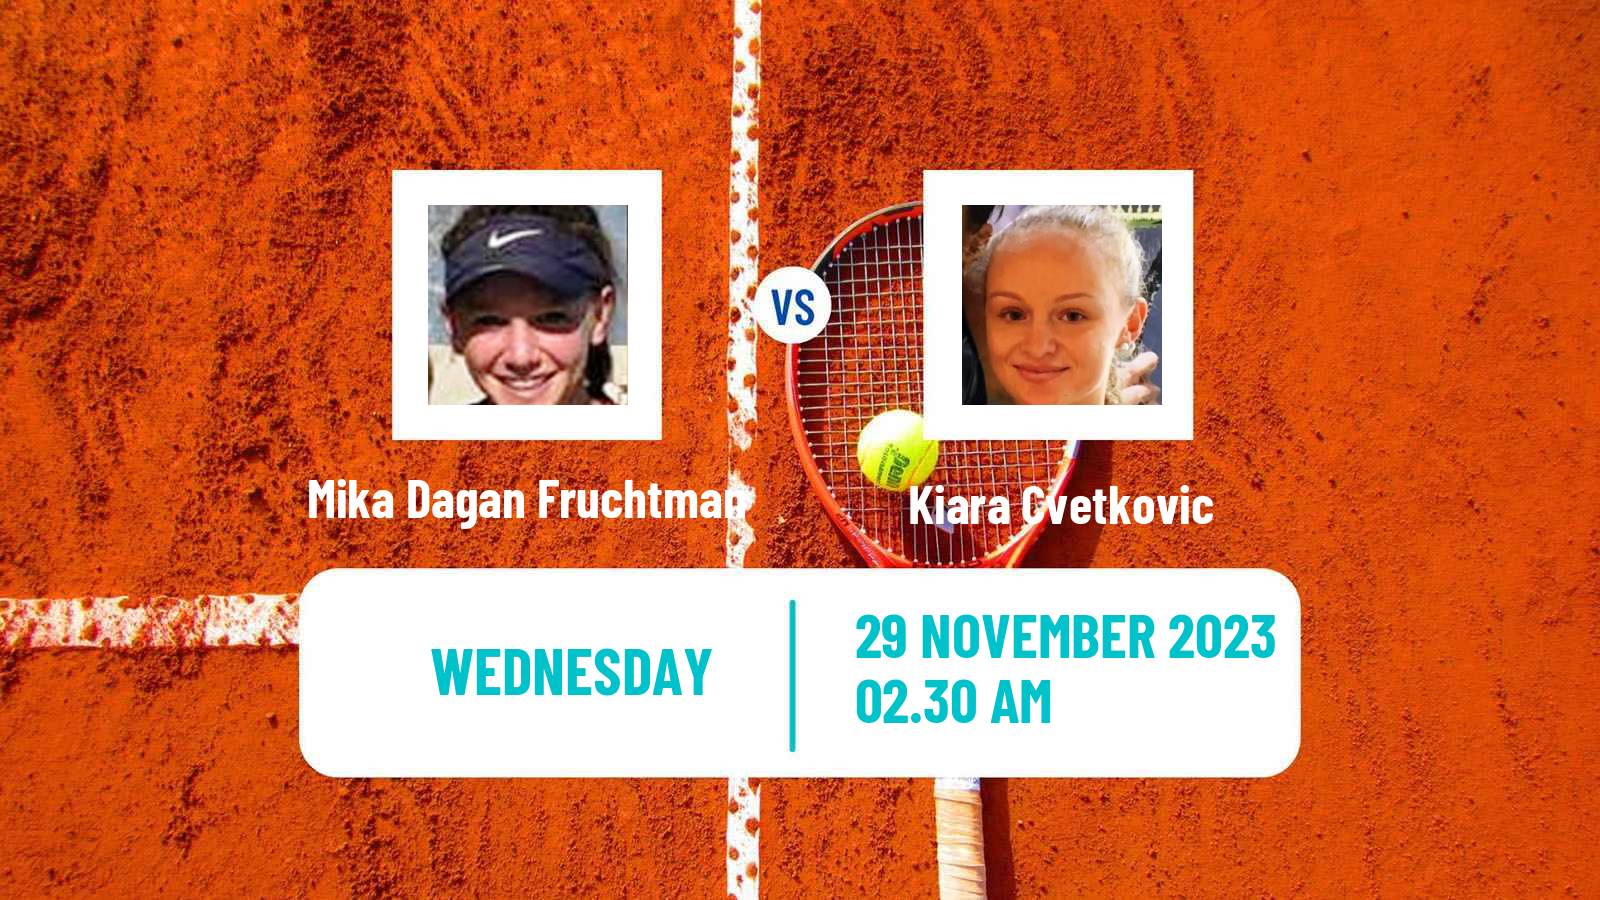 Tennis ITF W15 Heraklion 5 Women Mika Dagan Fruchtman - Kiara Cvetkovic